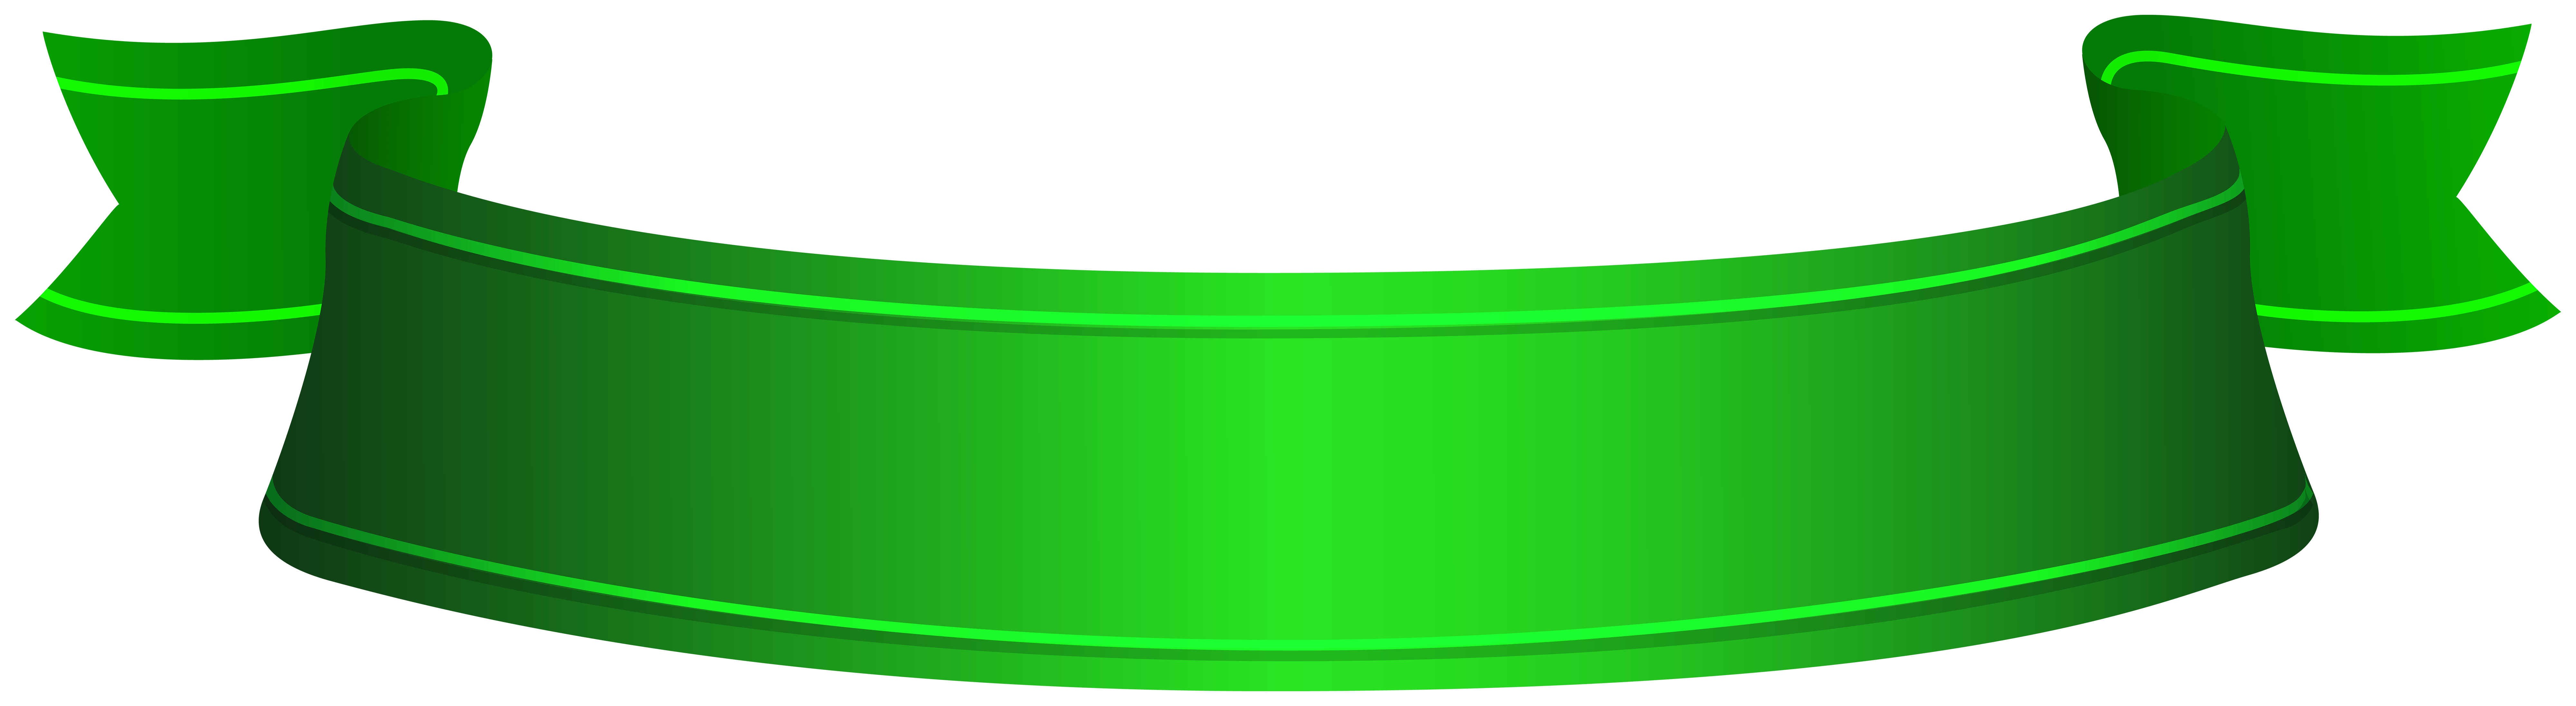 Light green ribbon banner, Stock vector